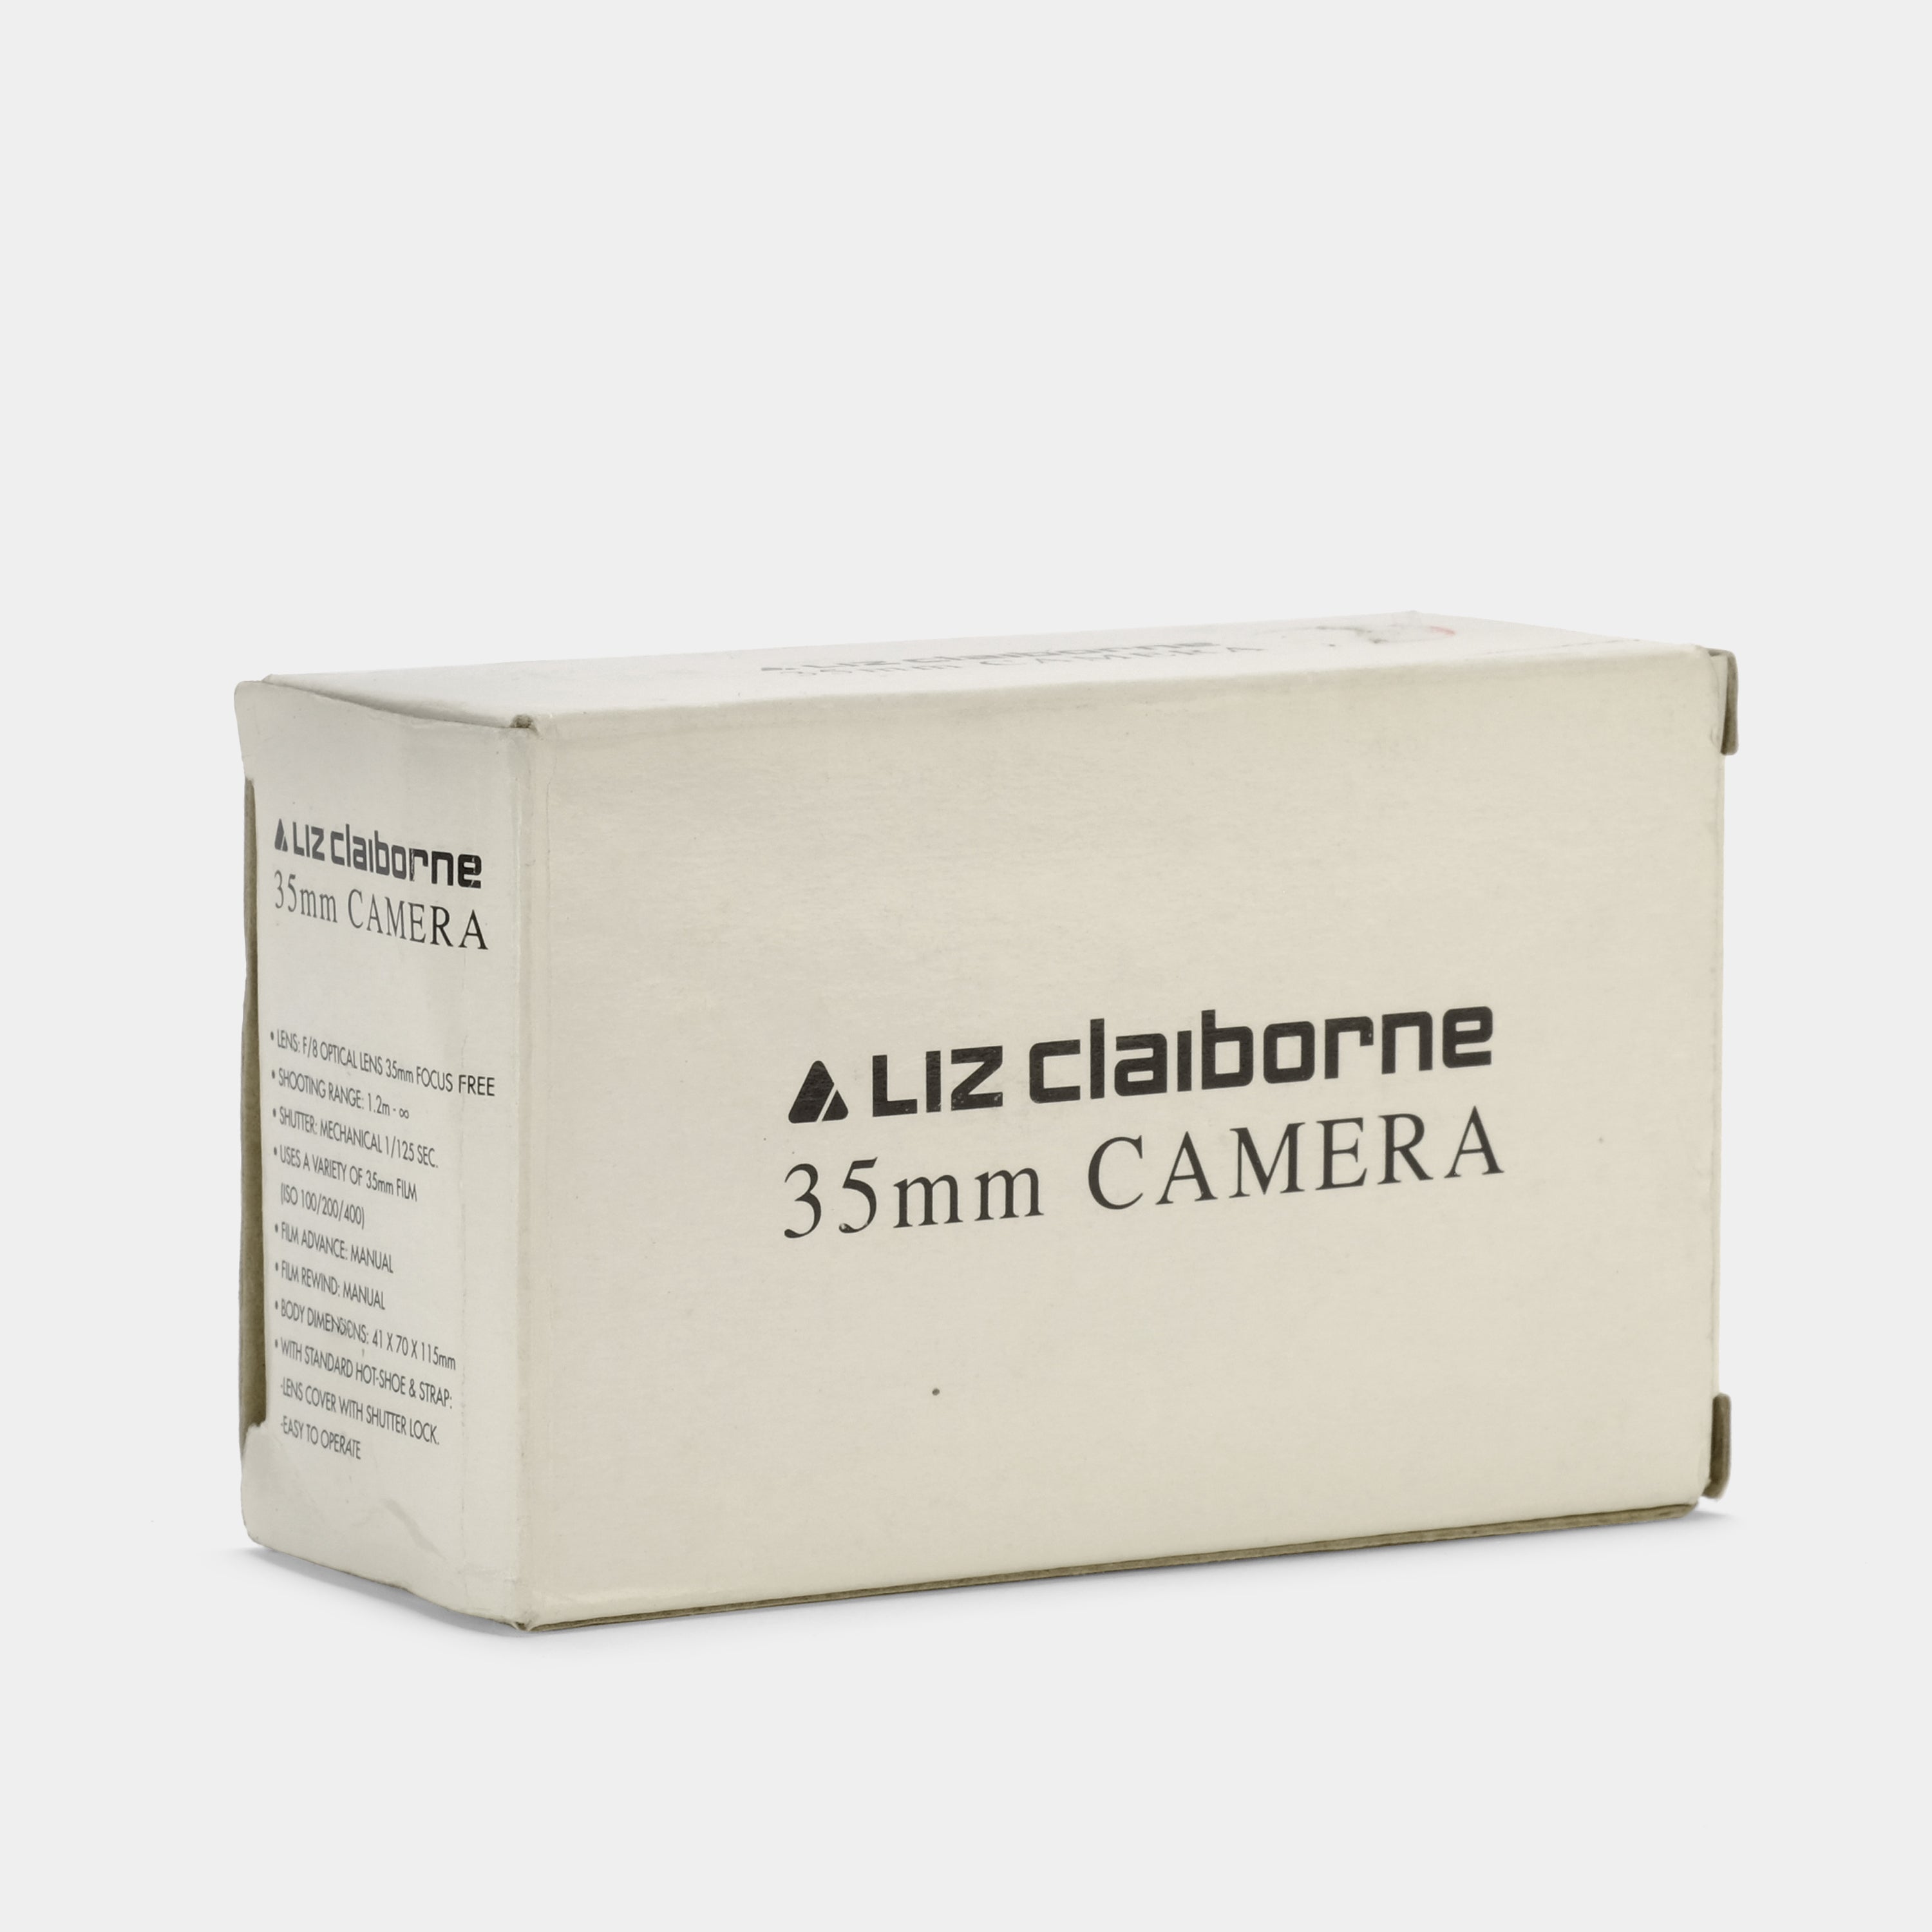 Liz Claiborne 35mm Point and Shoot Film Camera